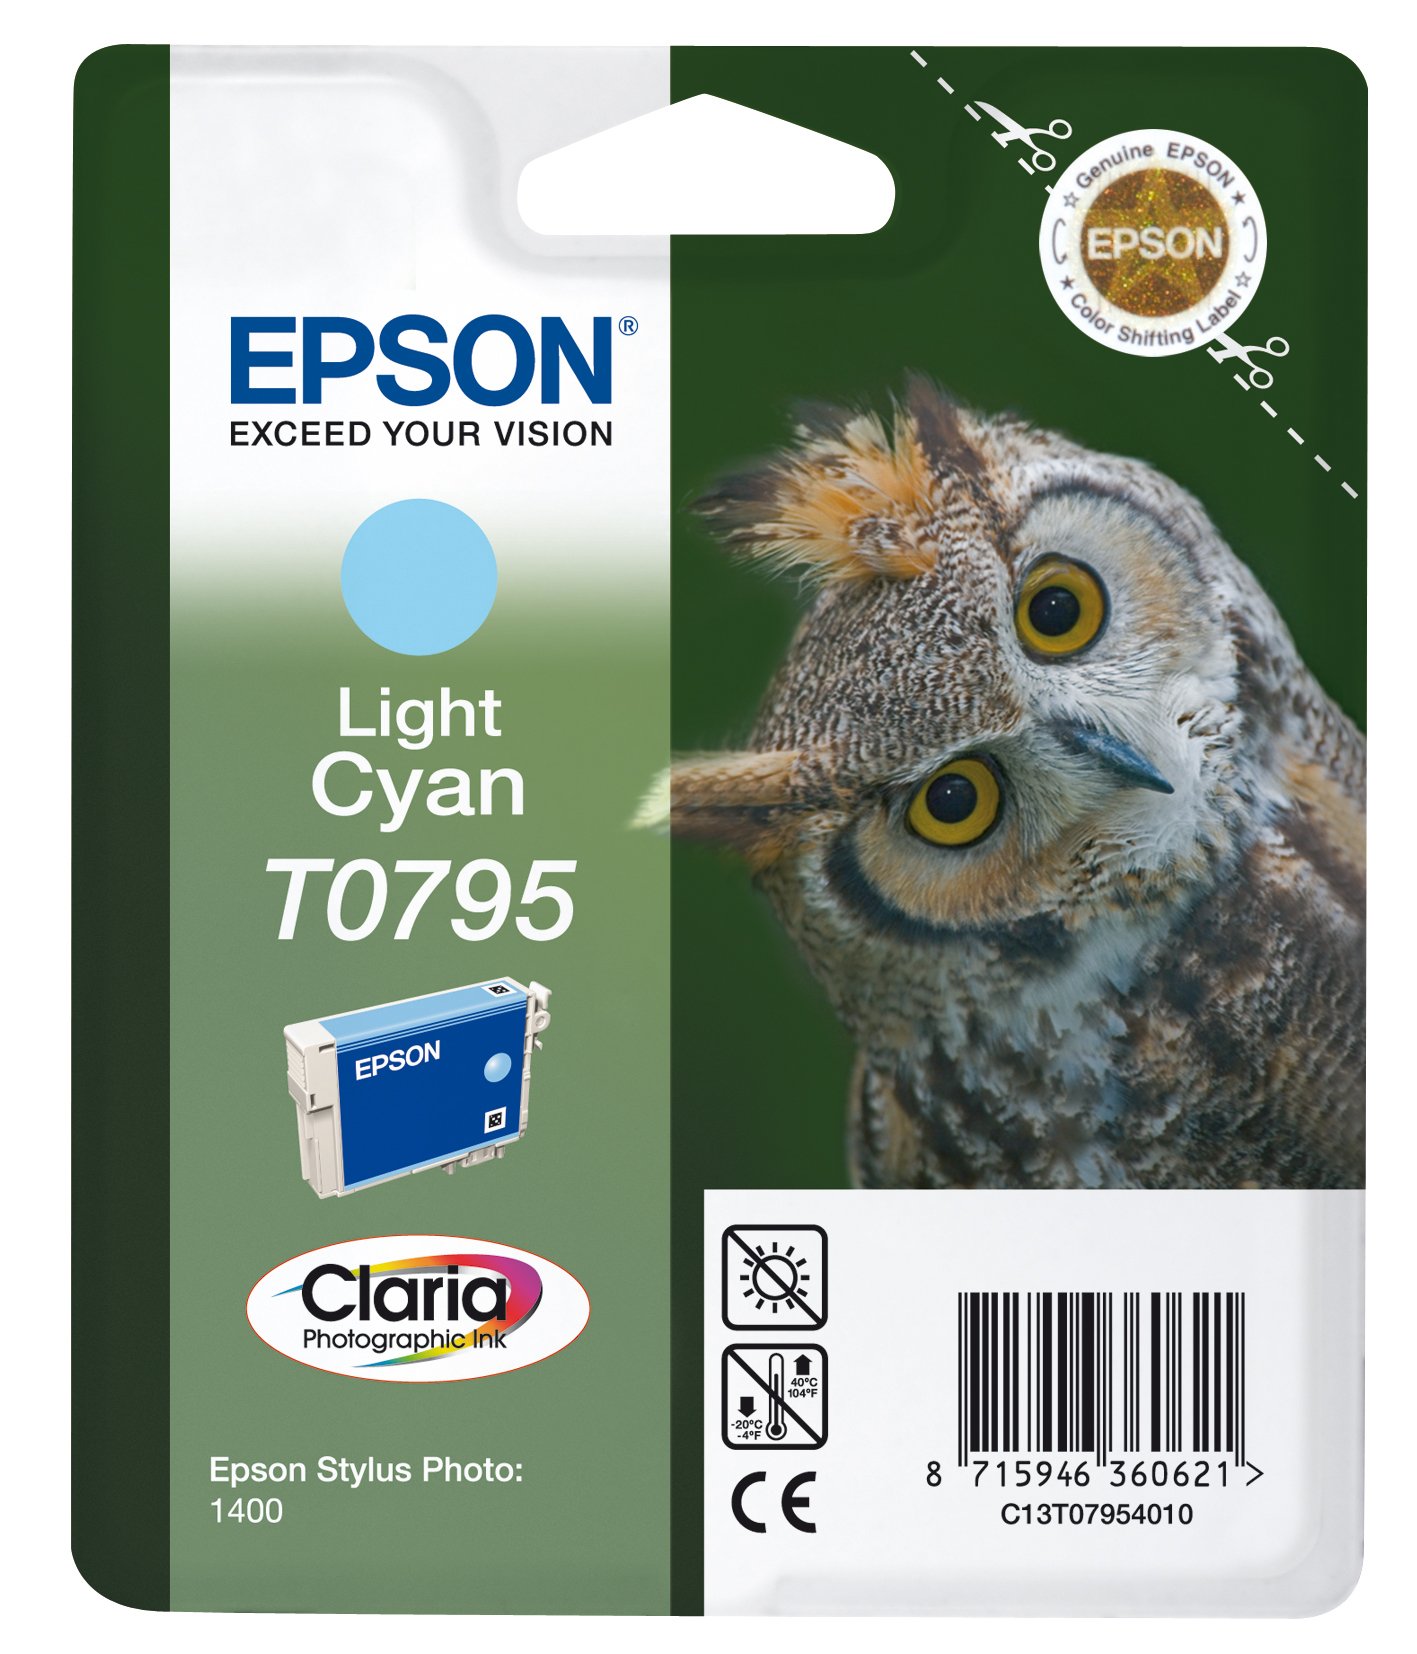 Indicator lights on the Epson Stylus Photo 1400 printer.